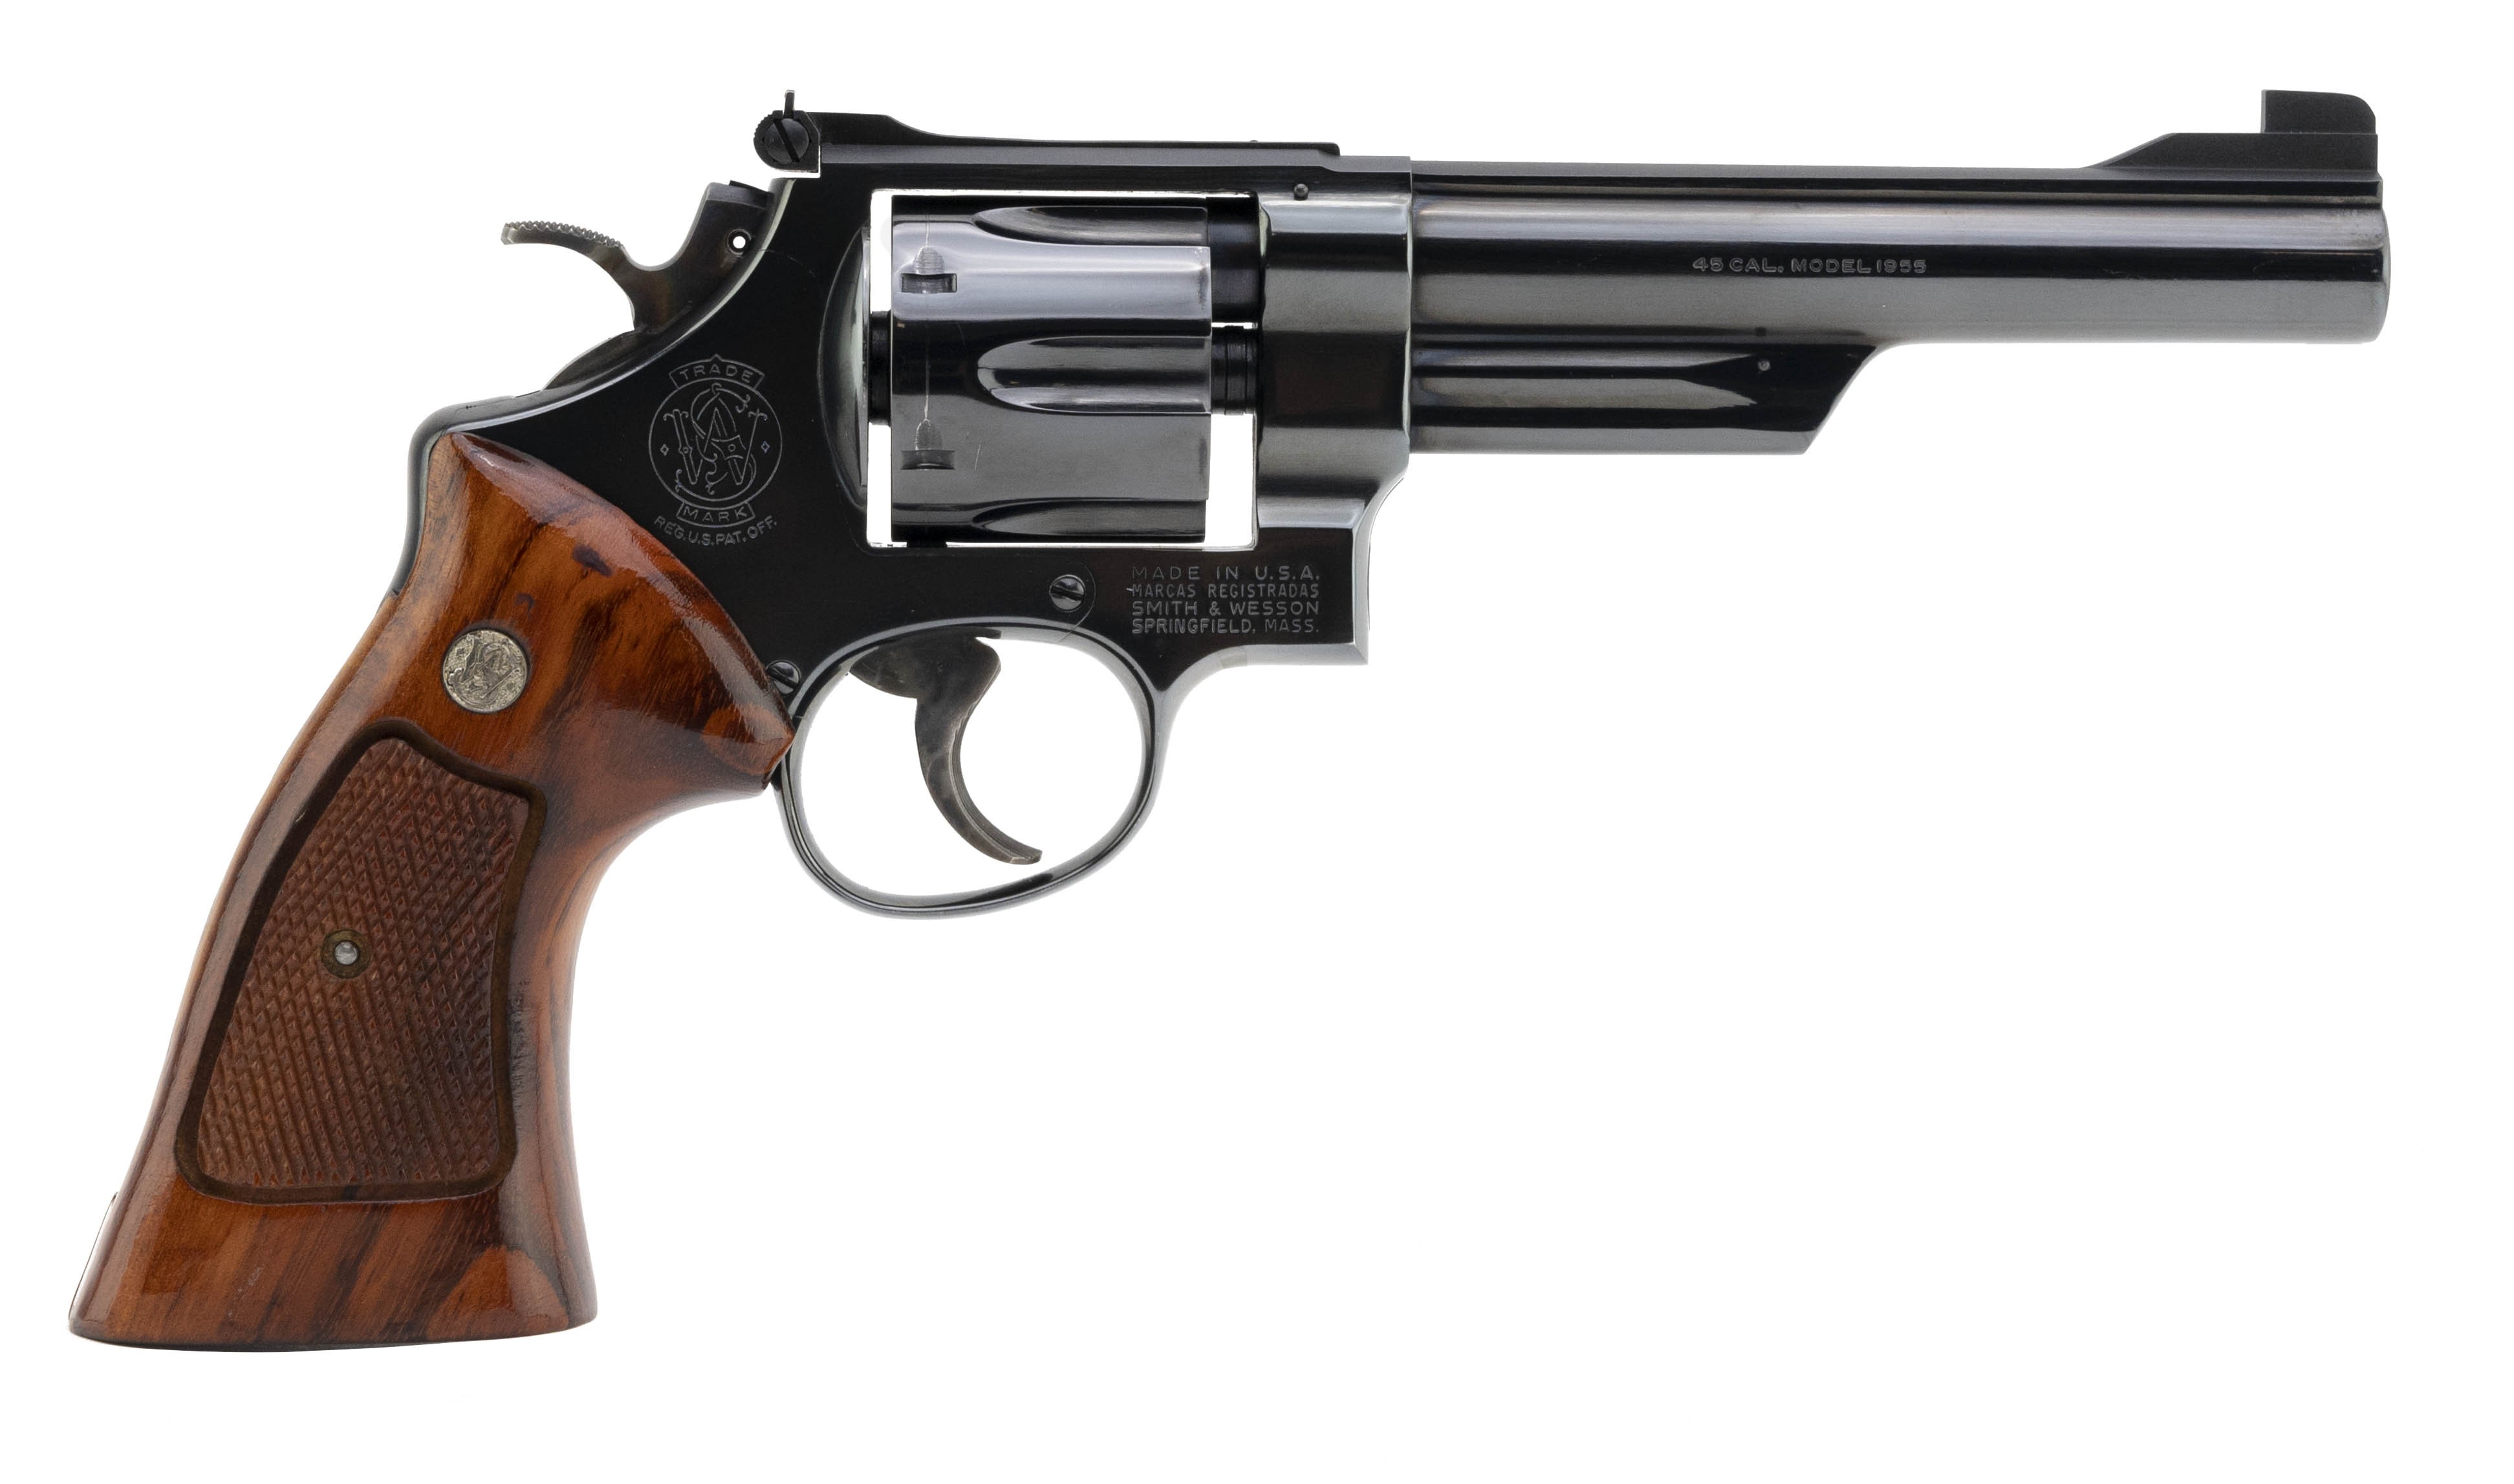 Smith & Wesson 25-2 .45 ACP caliber revolver for sale.